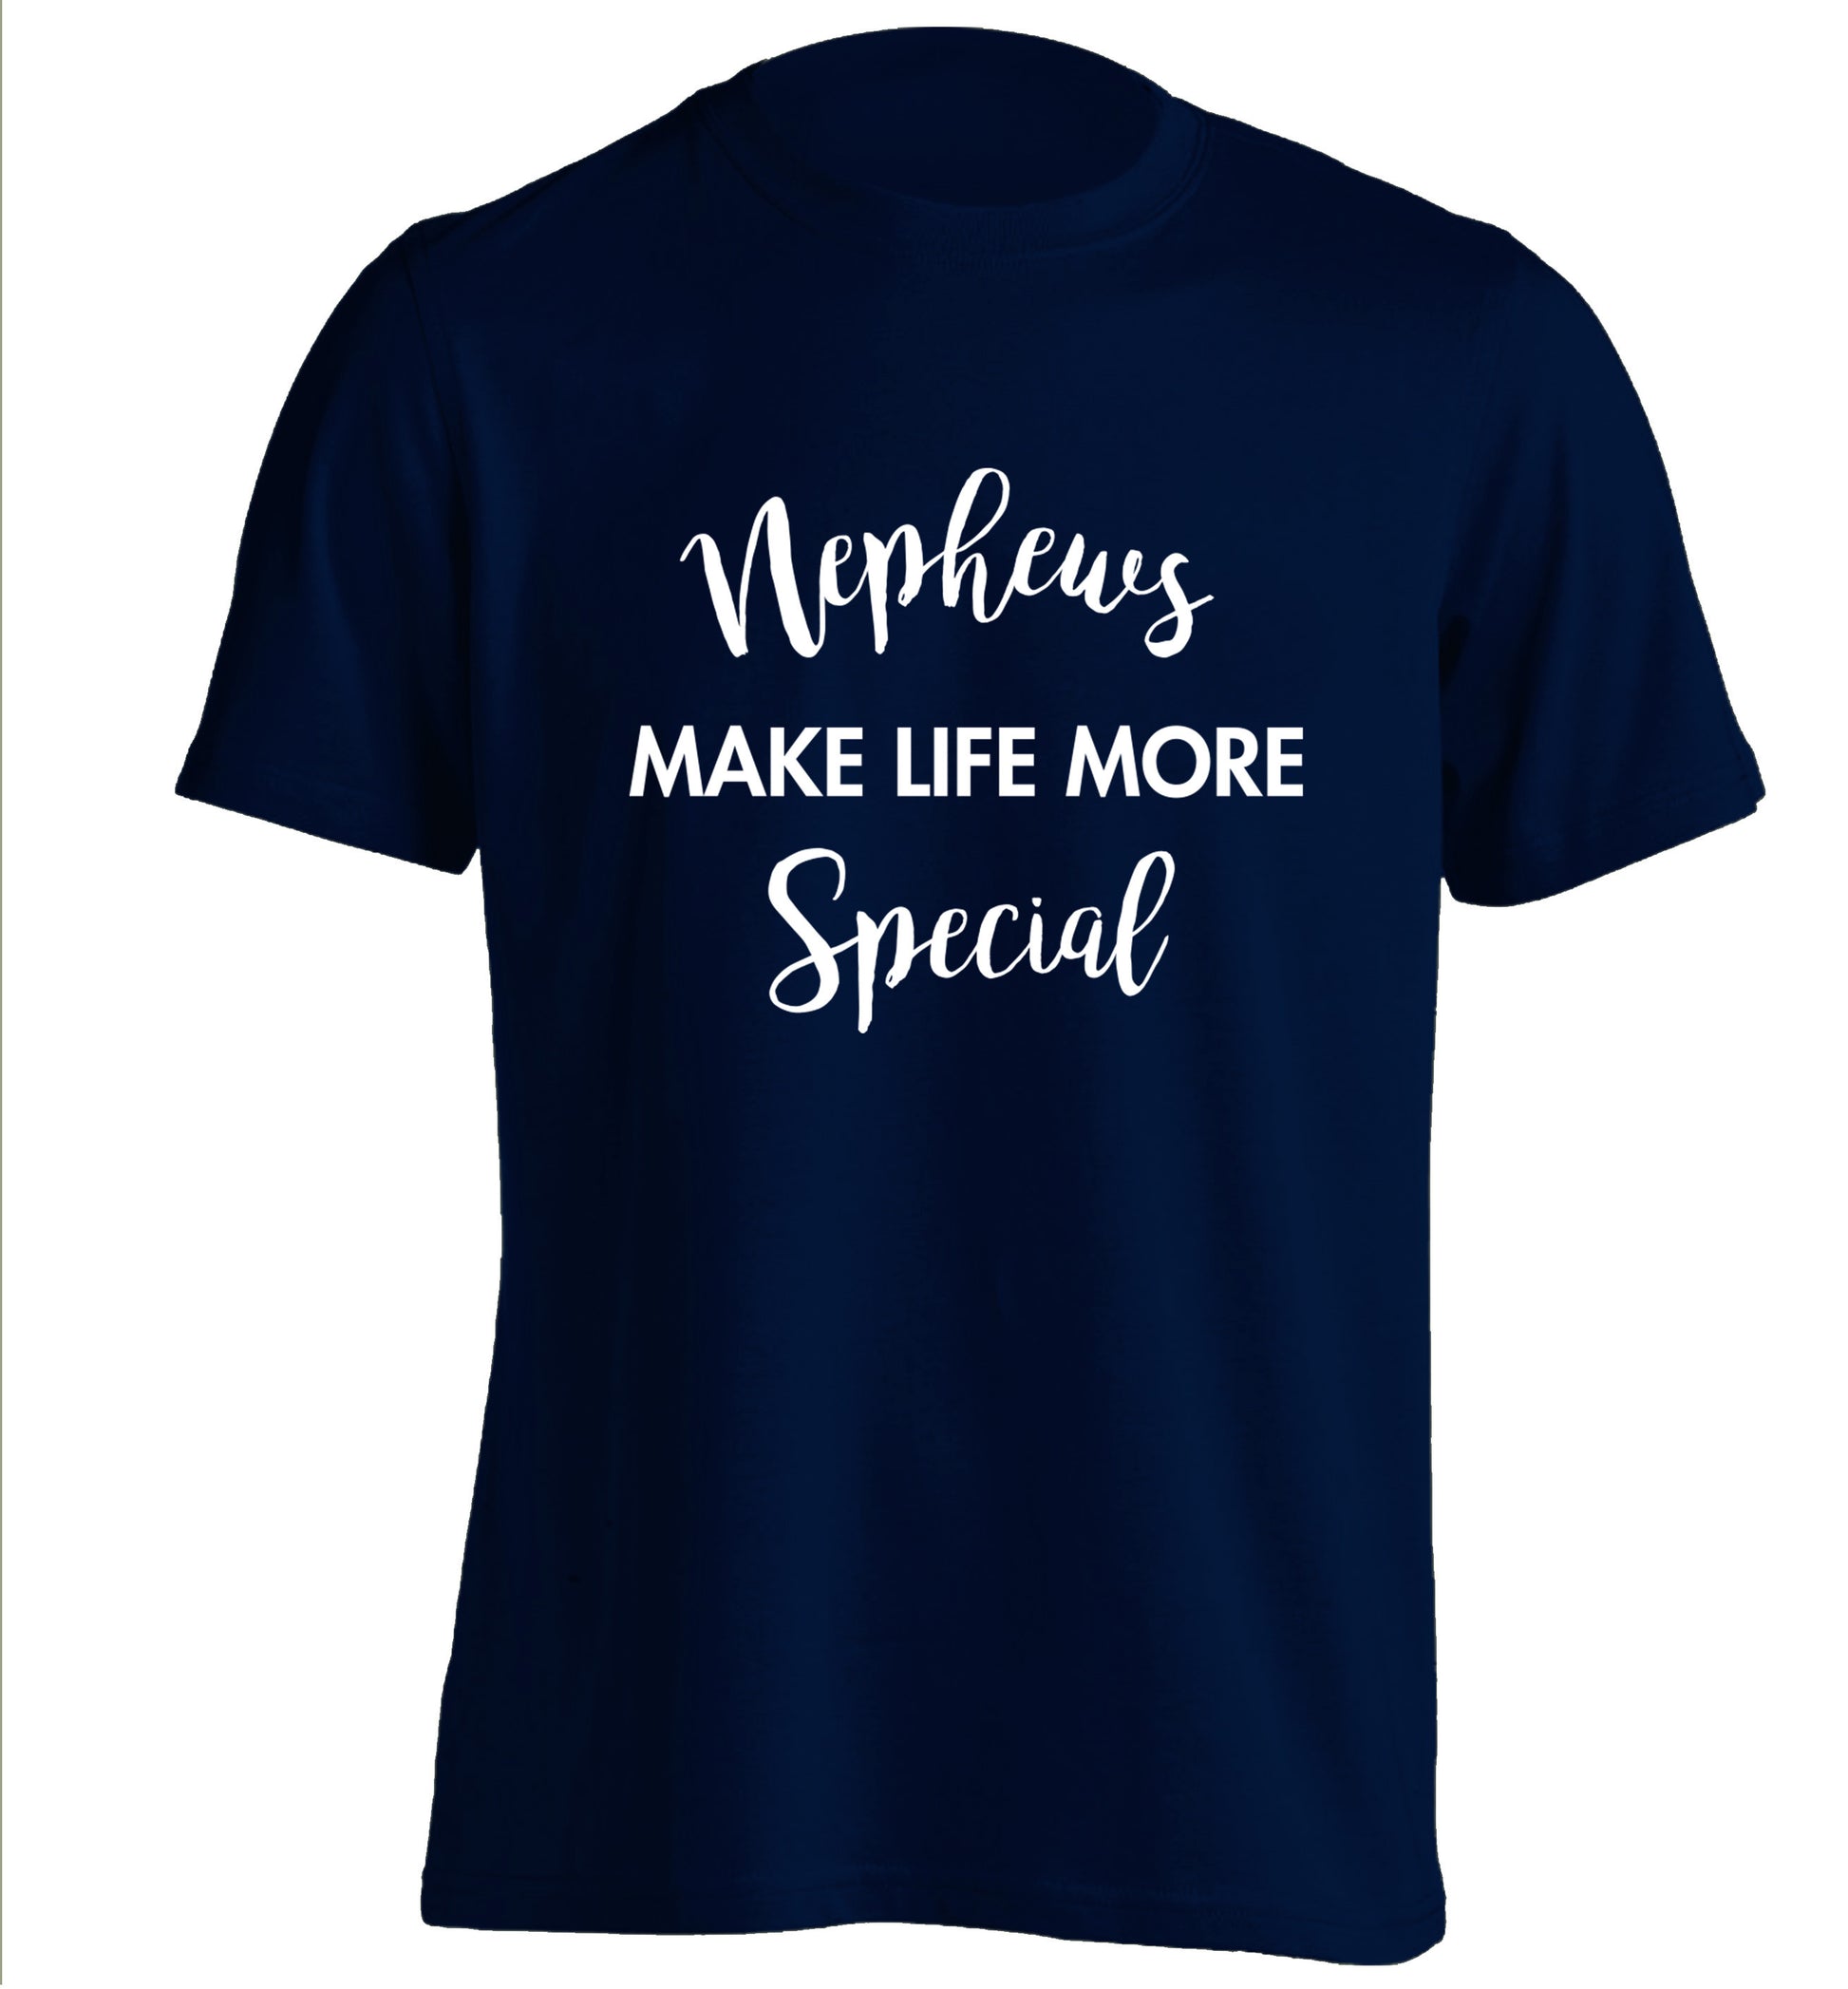 Nephews make life more special adults unisex navy Tshirt 2XL